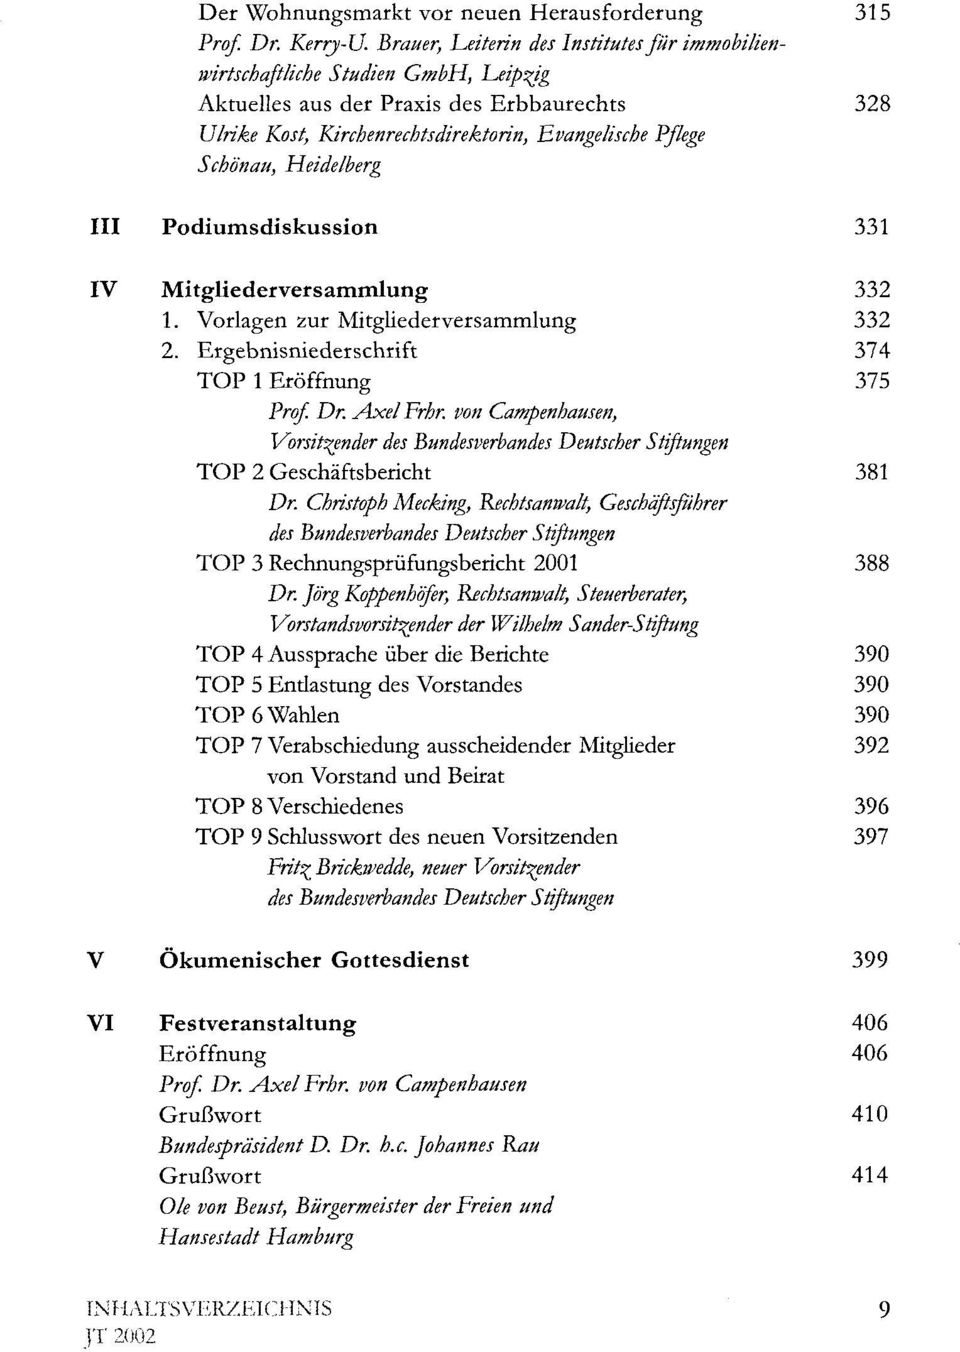 Heidelberg III Podiumsdiskussion 331 IV Mitgliederversammlung 332 1. Vorlagen zur Mitgliederversammlung 332 2. Ergebnisniederschrift 374 TOP l Eröffnung 375 Prof. Dr. Axel Frhr.